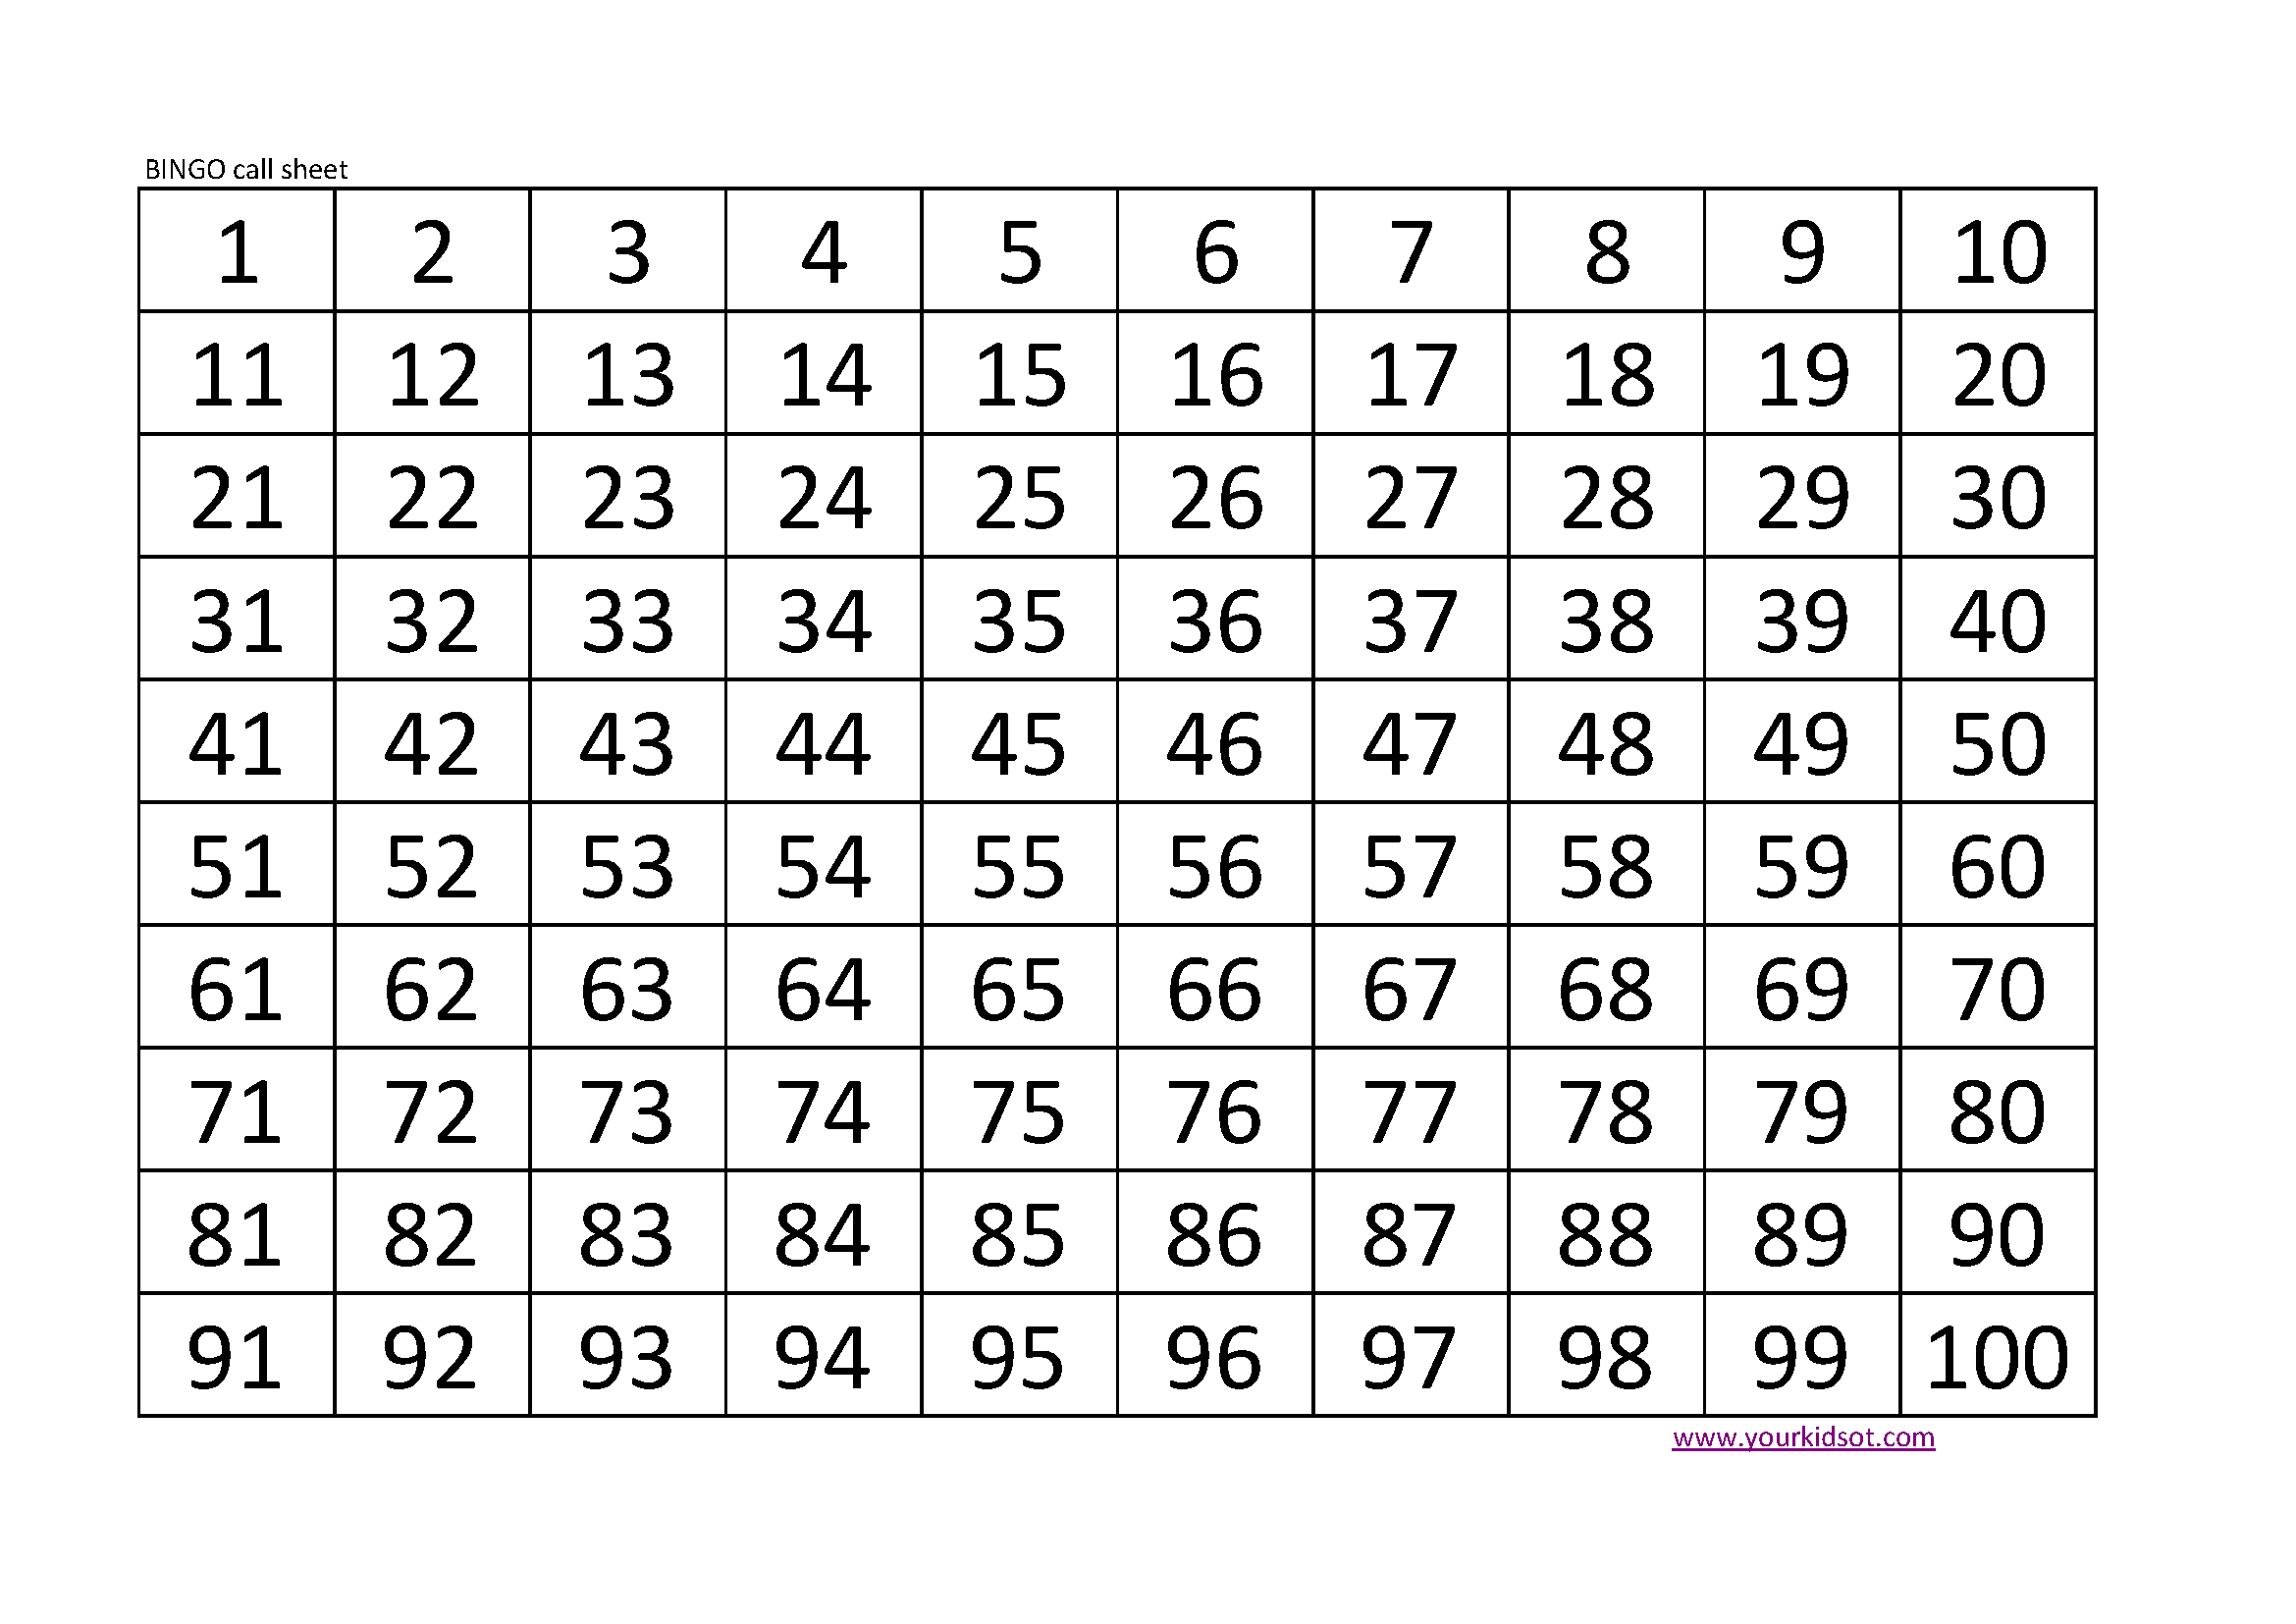 Free Printable Bingo Call Sheet